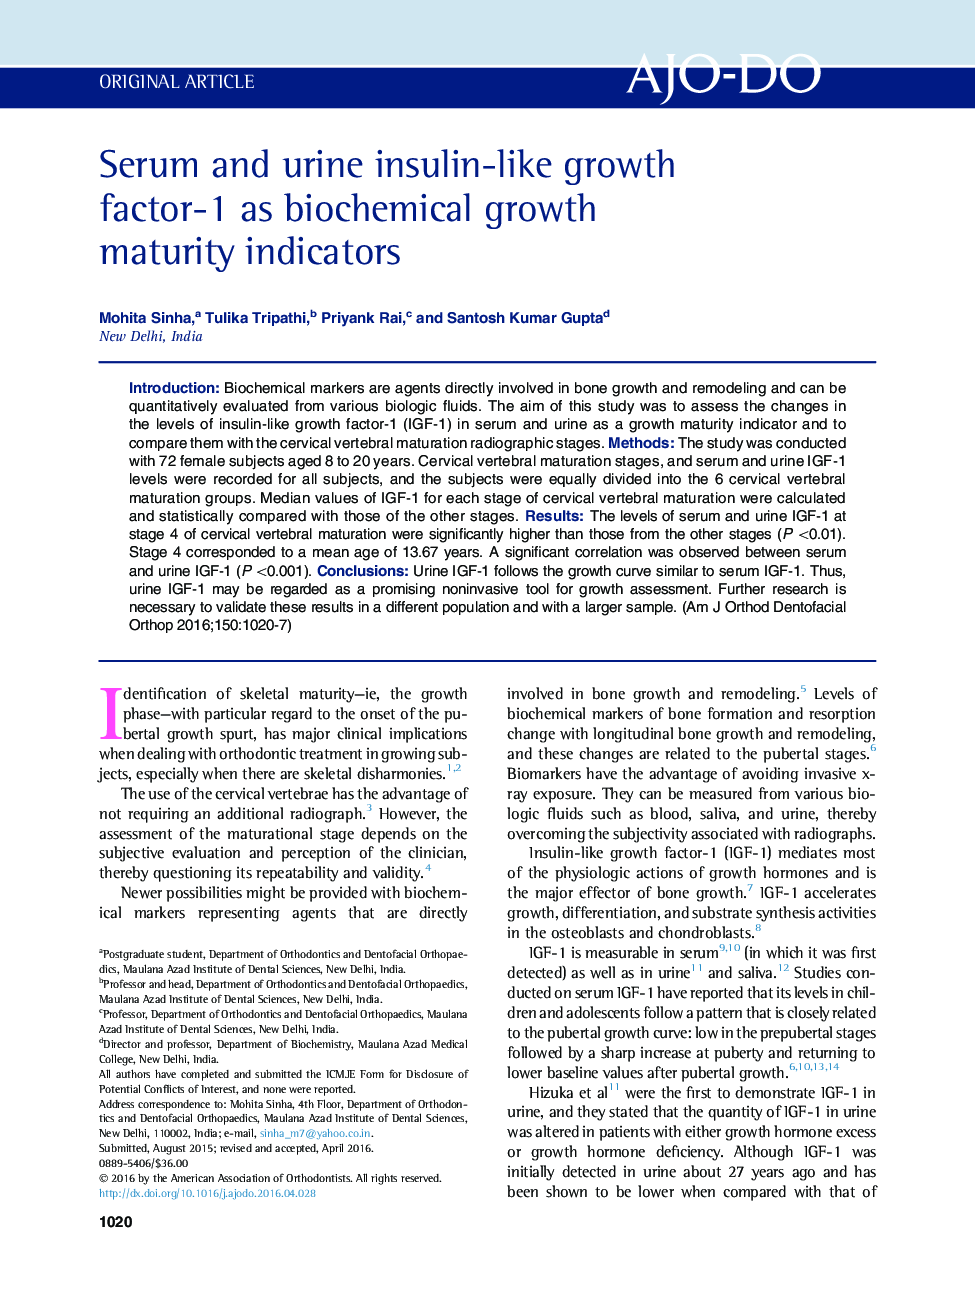 Serum and urine insulin-like growth factor-1 as biochemical growth maturityÂ indicators